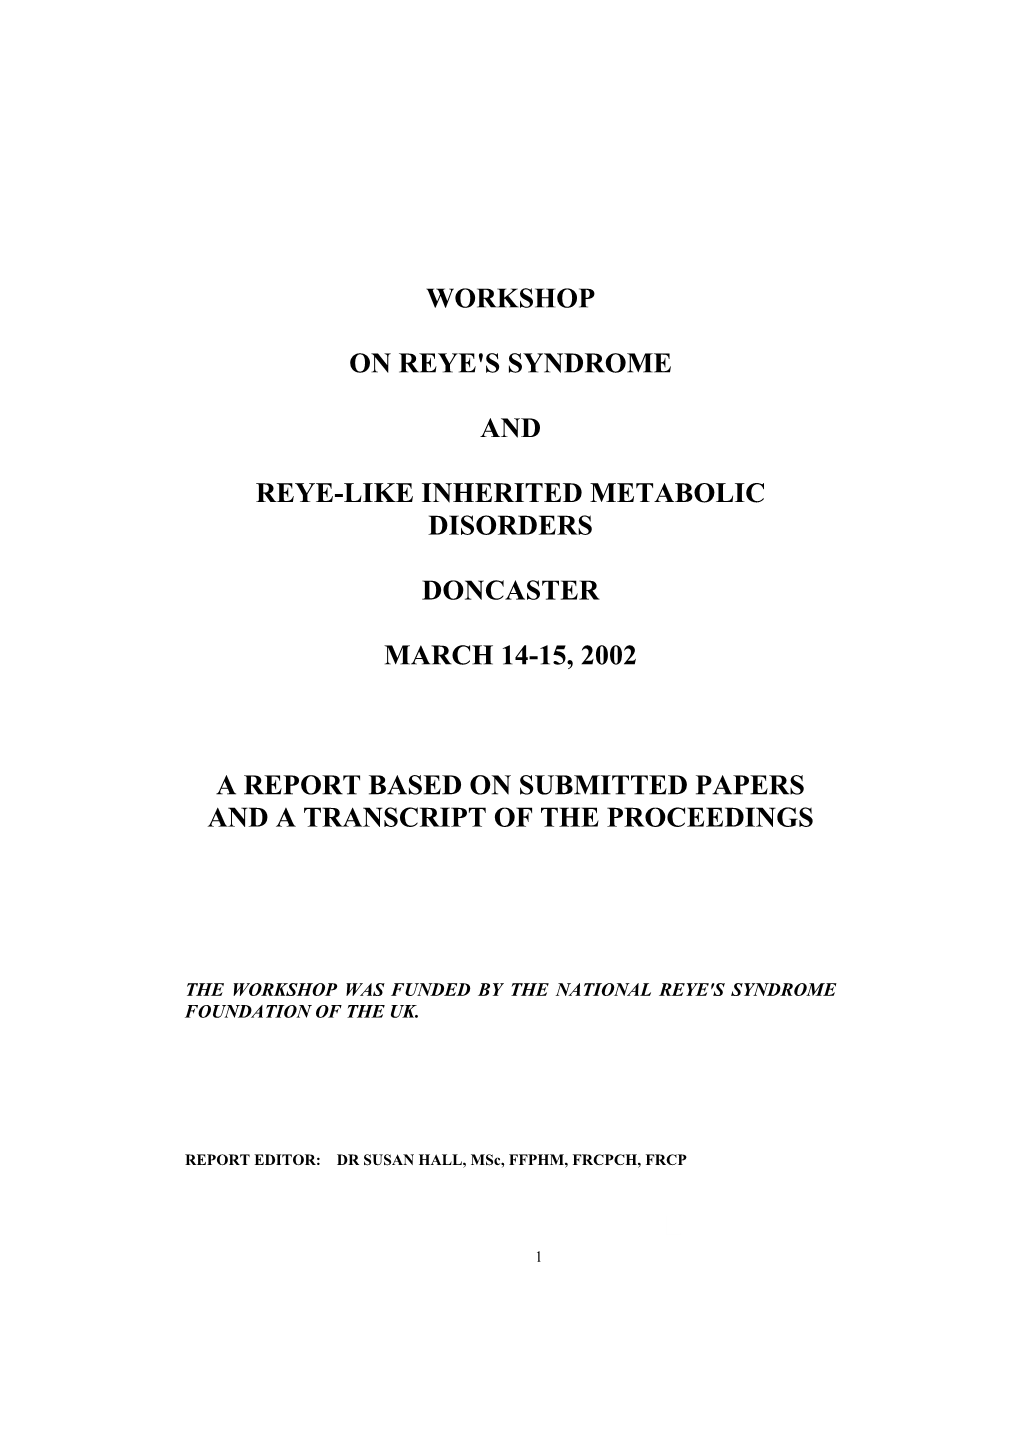 Proceedings of Workshop on Reye's Syndrome and Reye-Like Inherited Metabolic Disorders